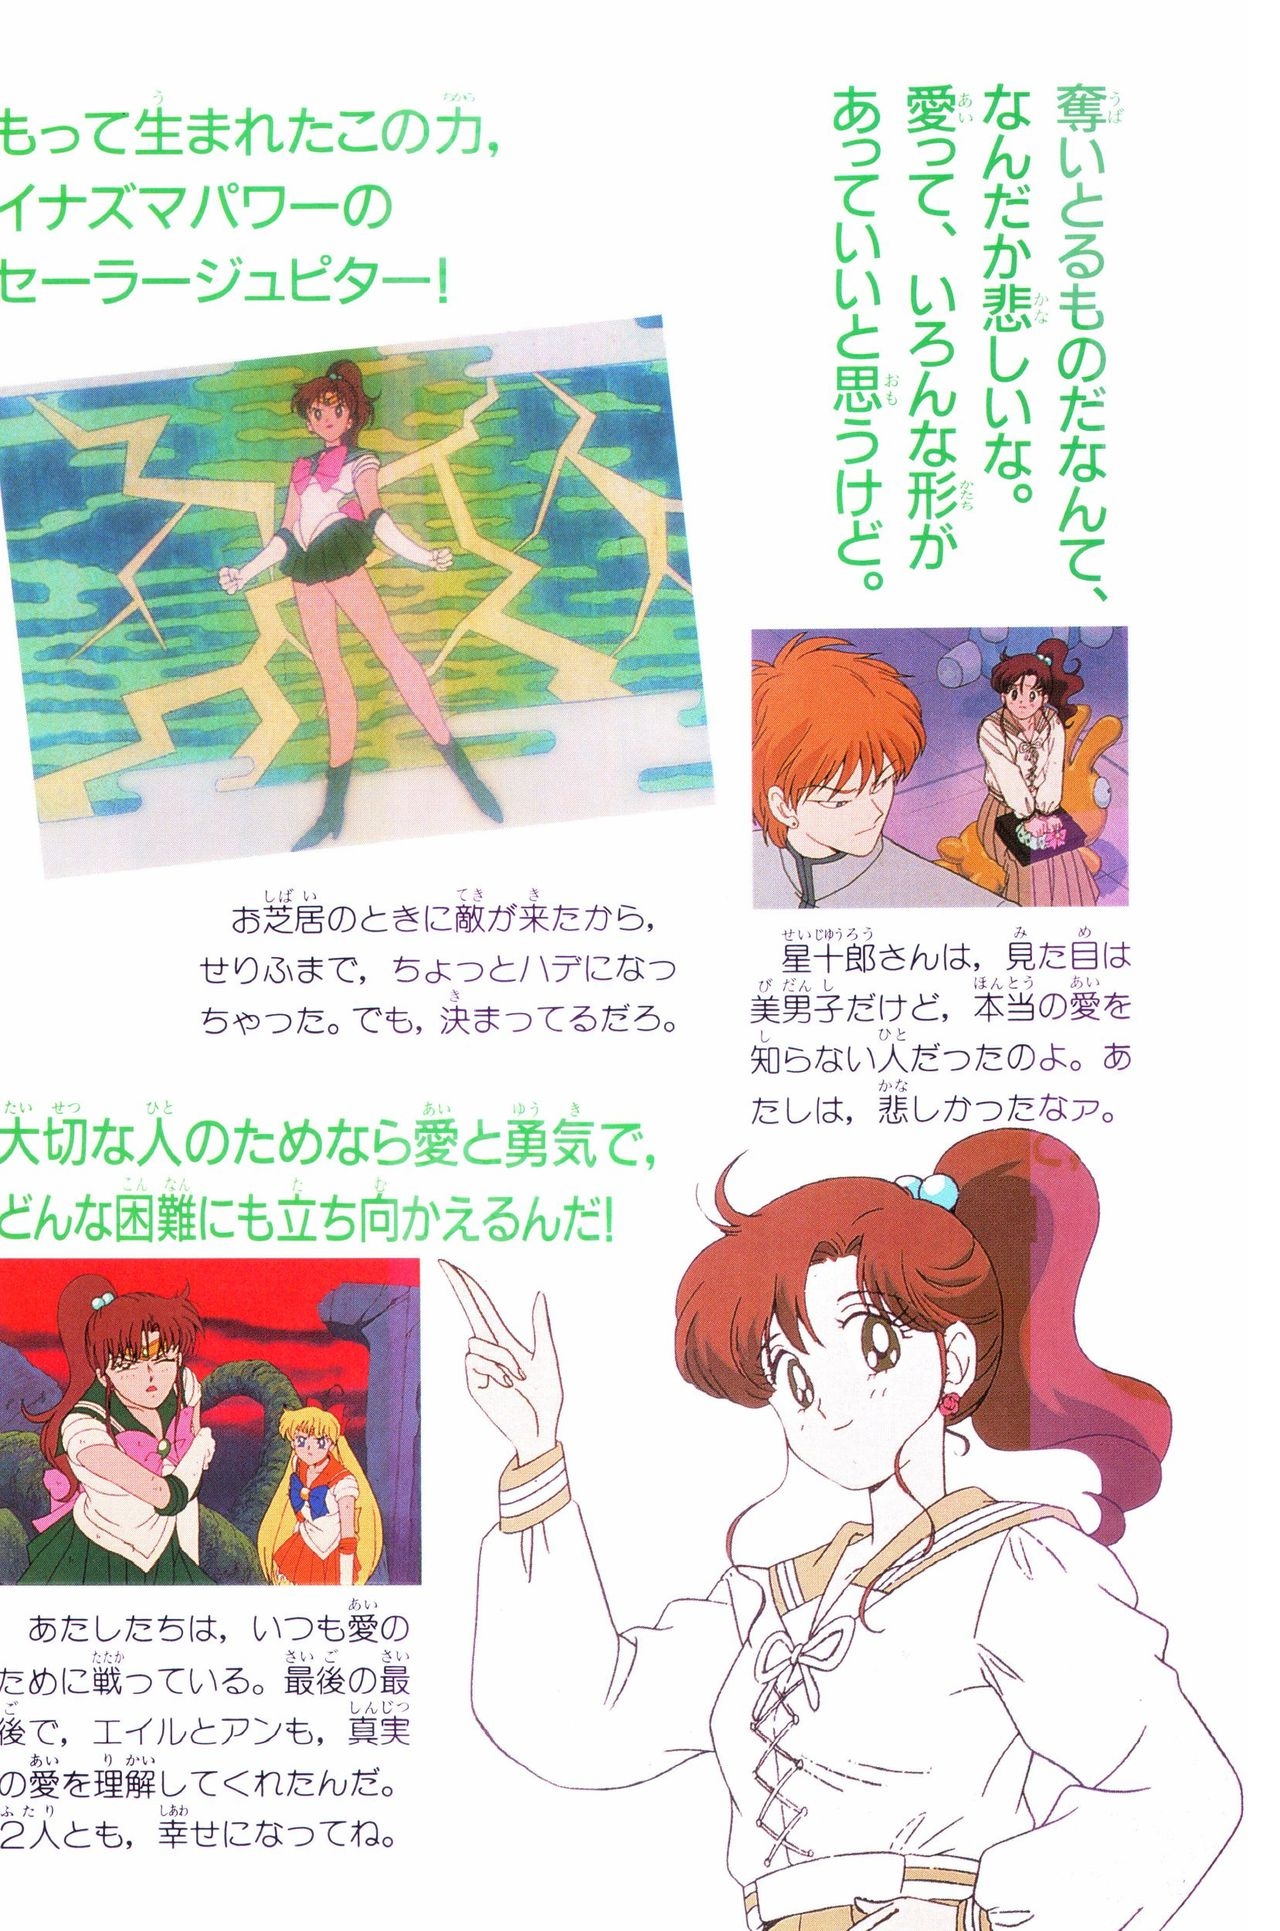 Sailor Moon Official Fan Book – Sailor Jupiter 51